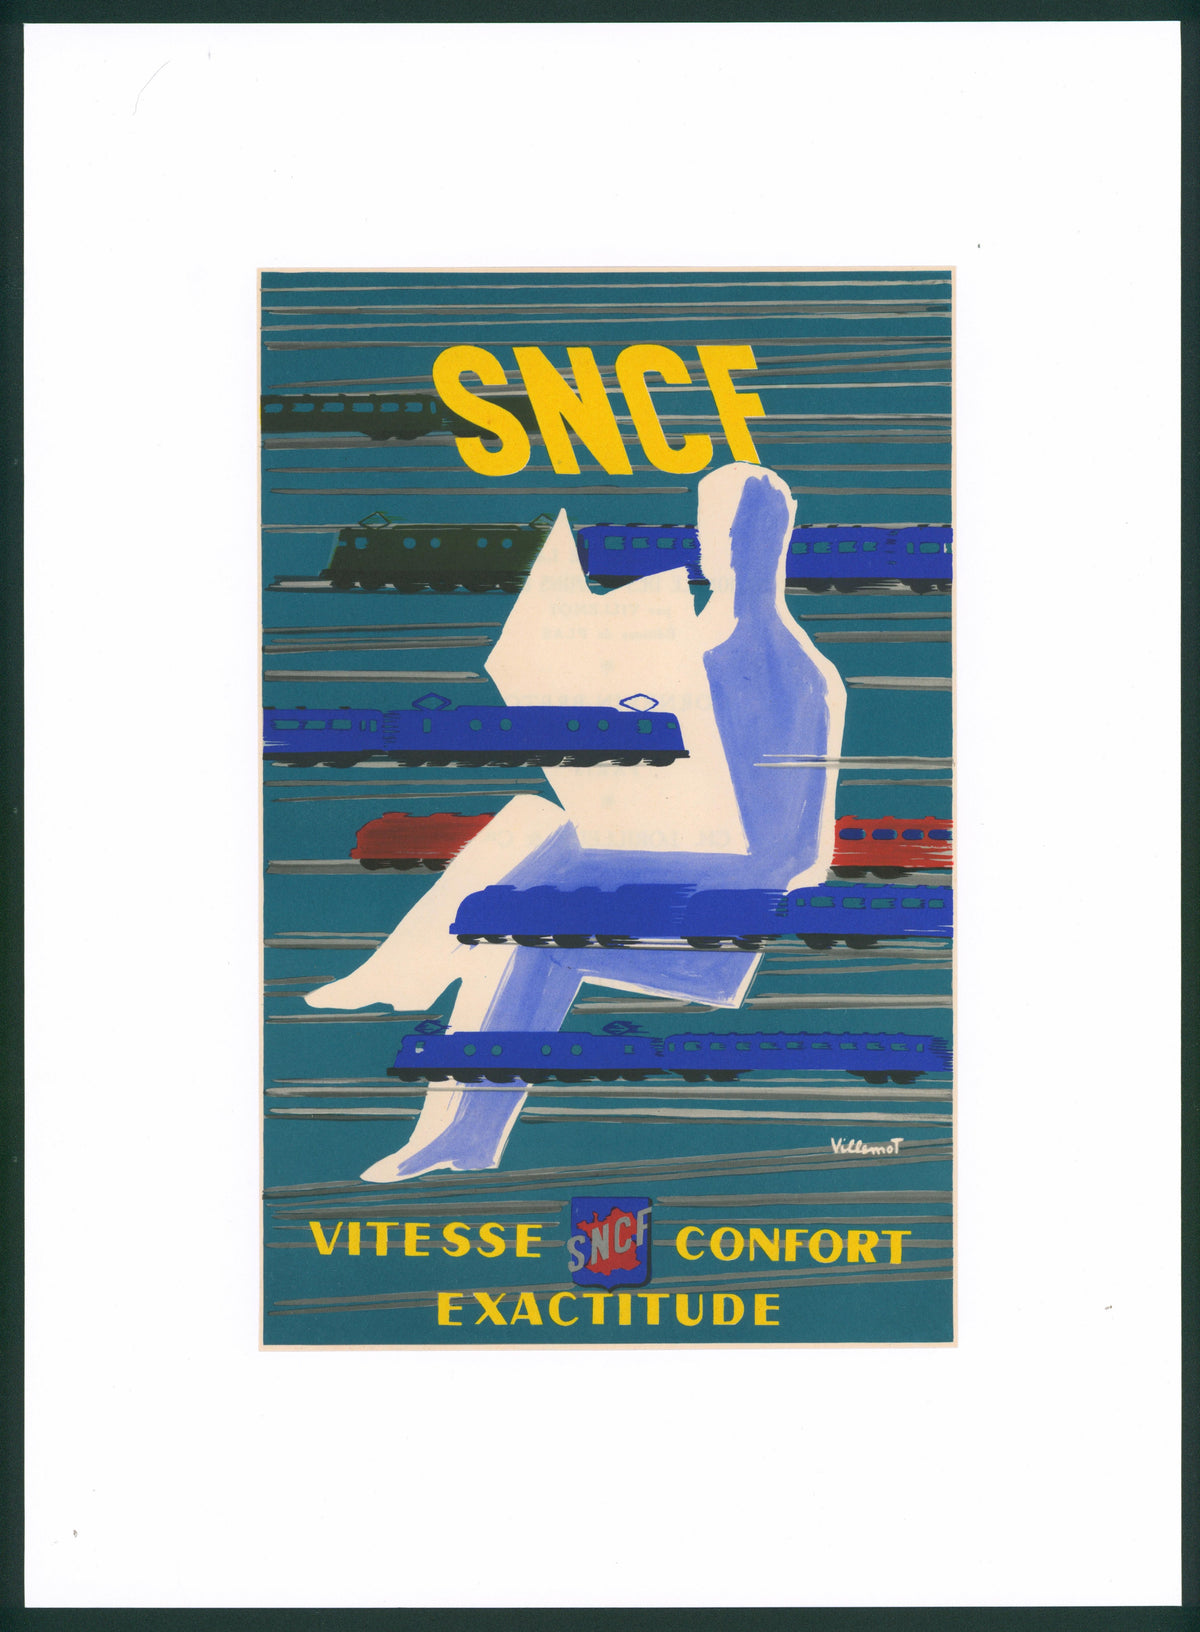 SNCF- French Magazine Ad - Authentic Vintage Antique Print